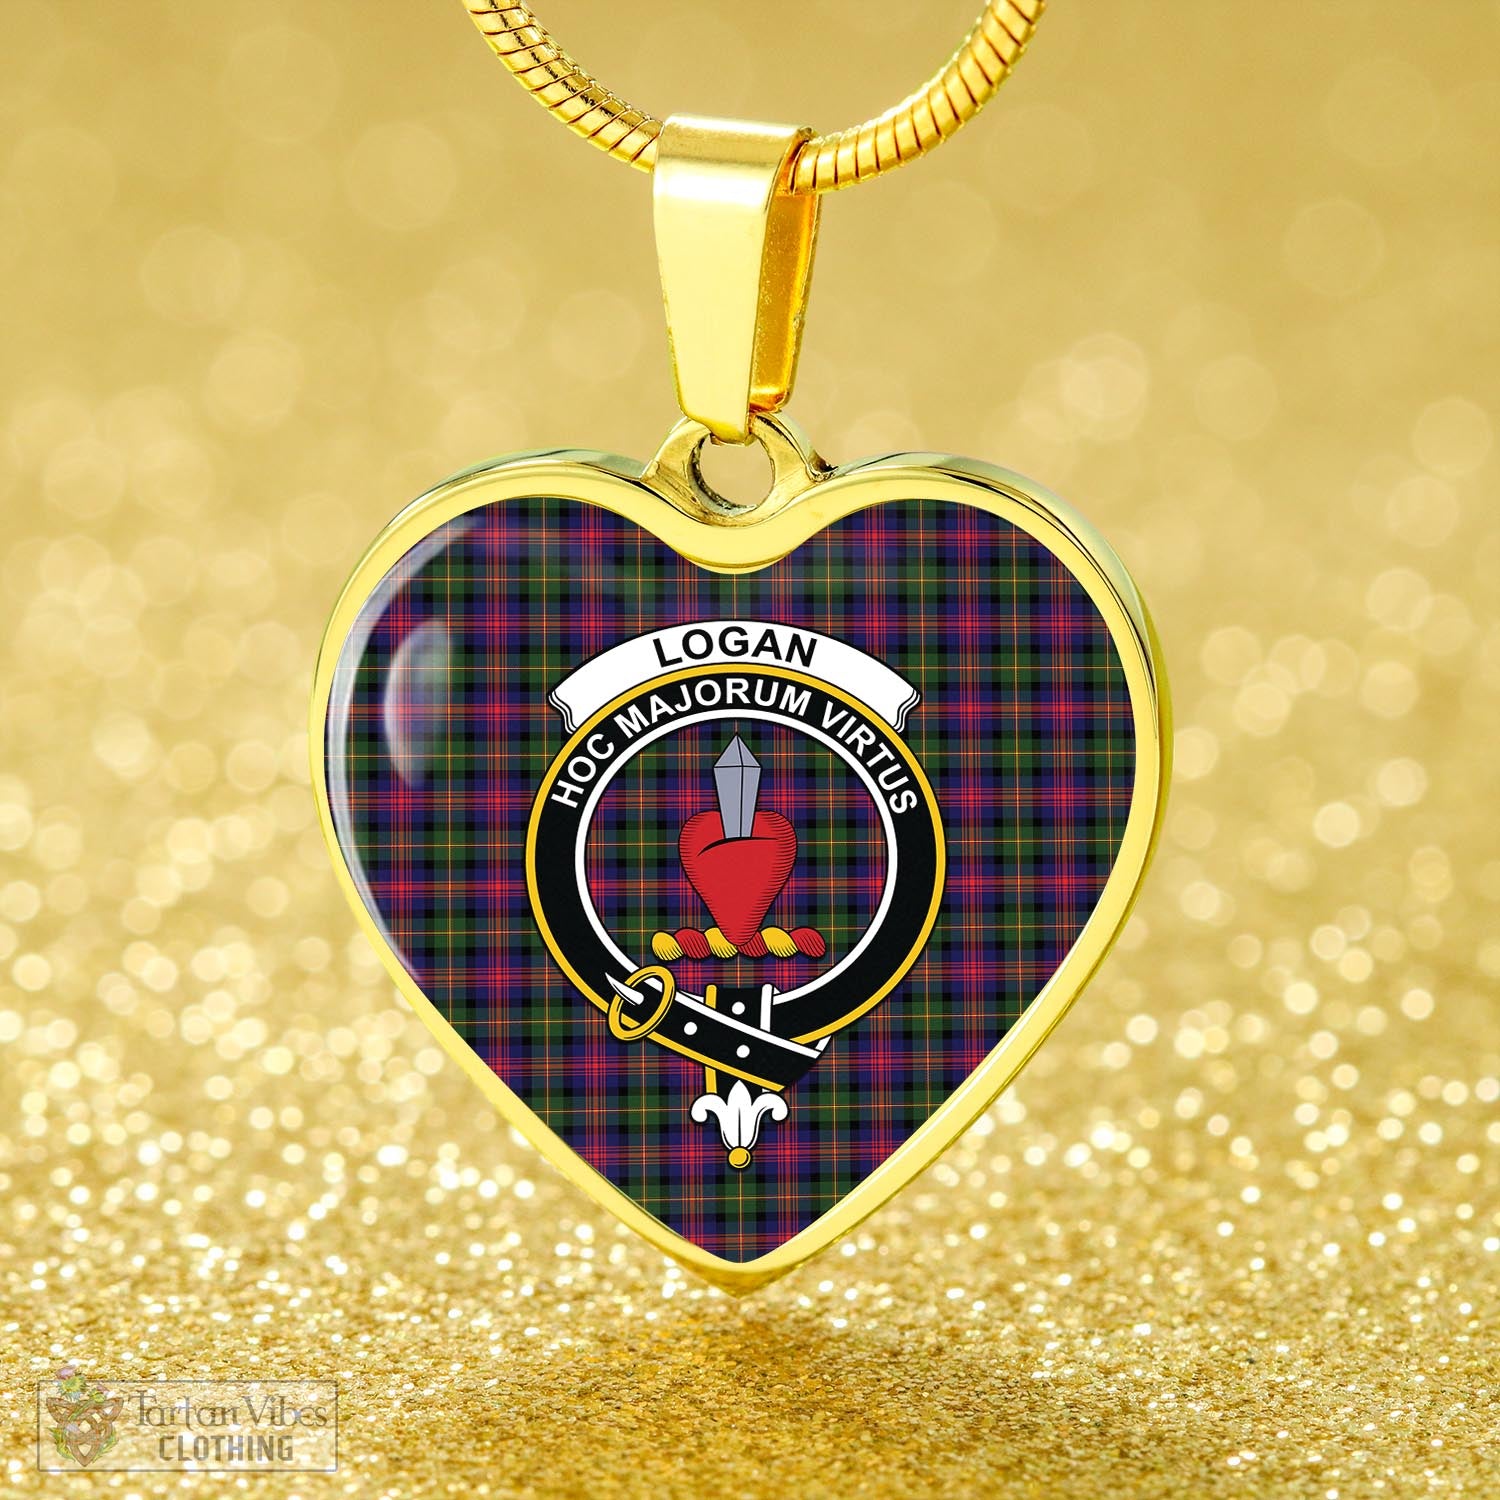 Tartan Vibes Clothing Logan Modern Tartan Heart Necklace with Family Crest